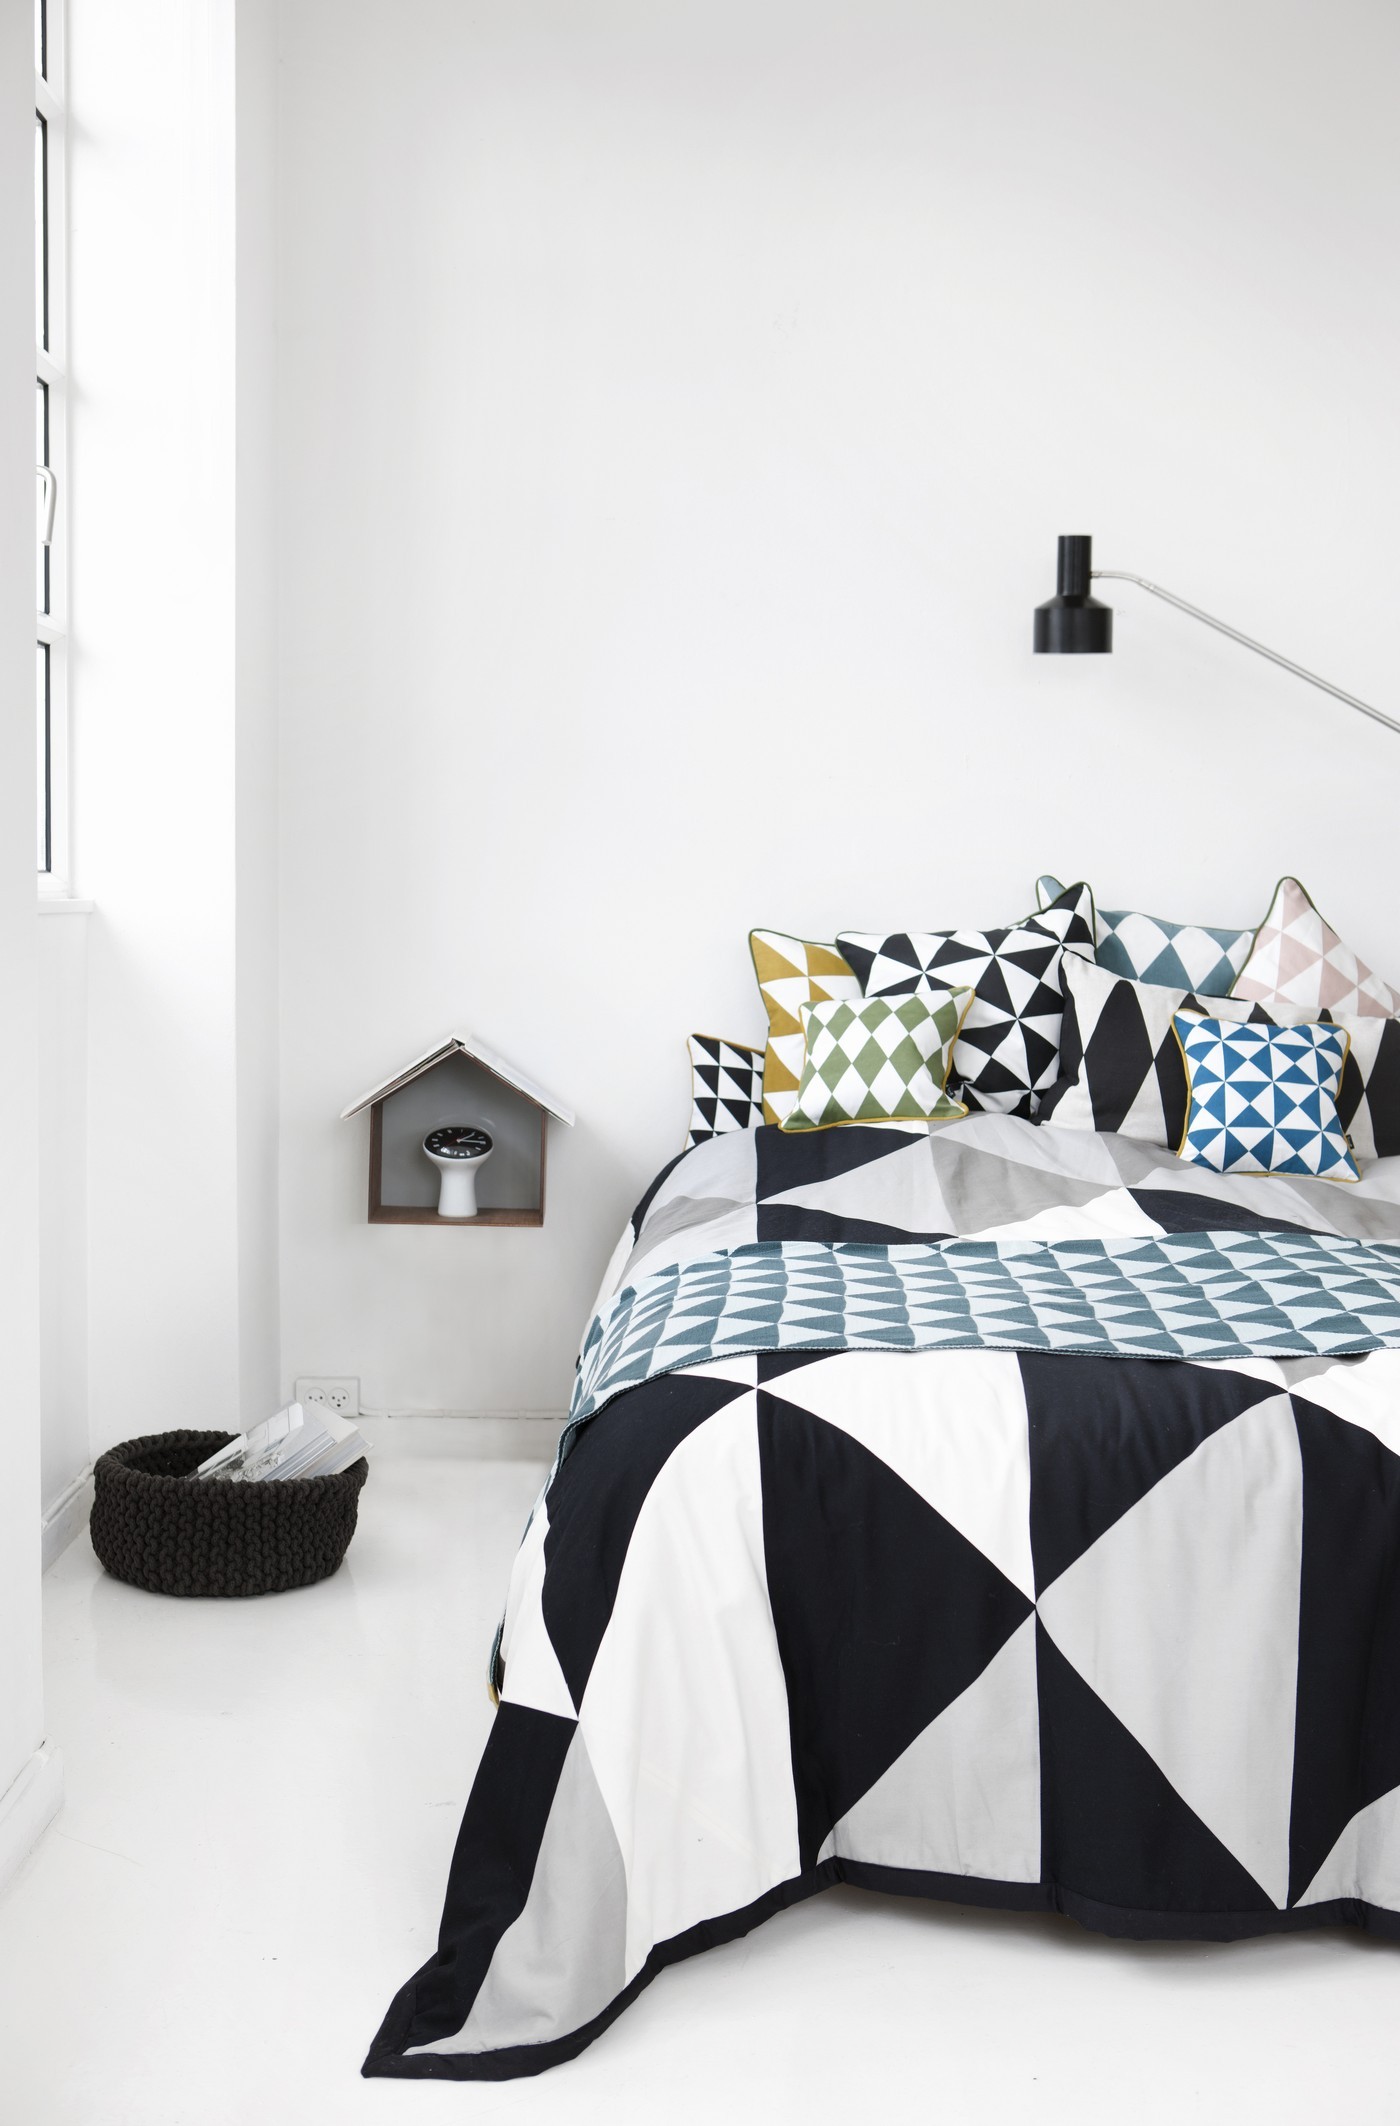 Ferm Living's Geometry cushions, Cloudberry Living